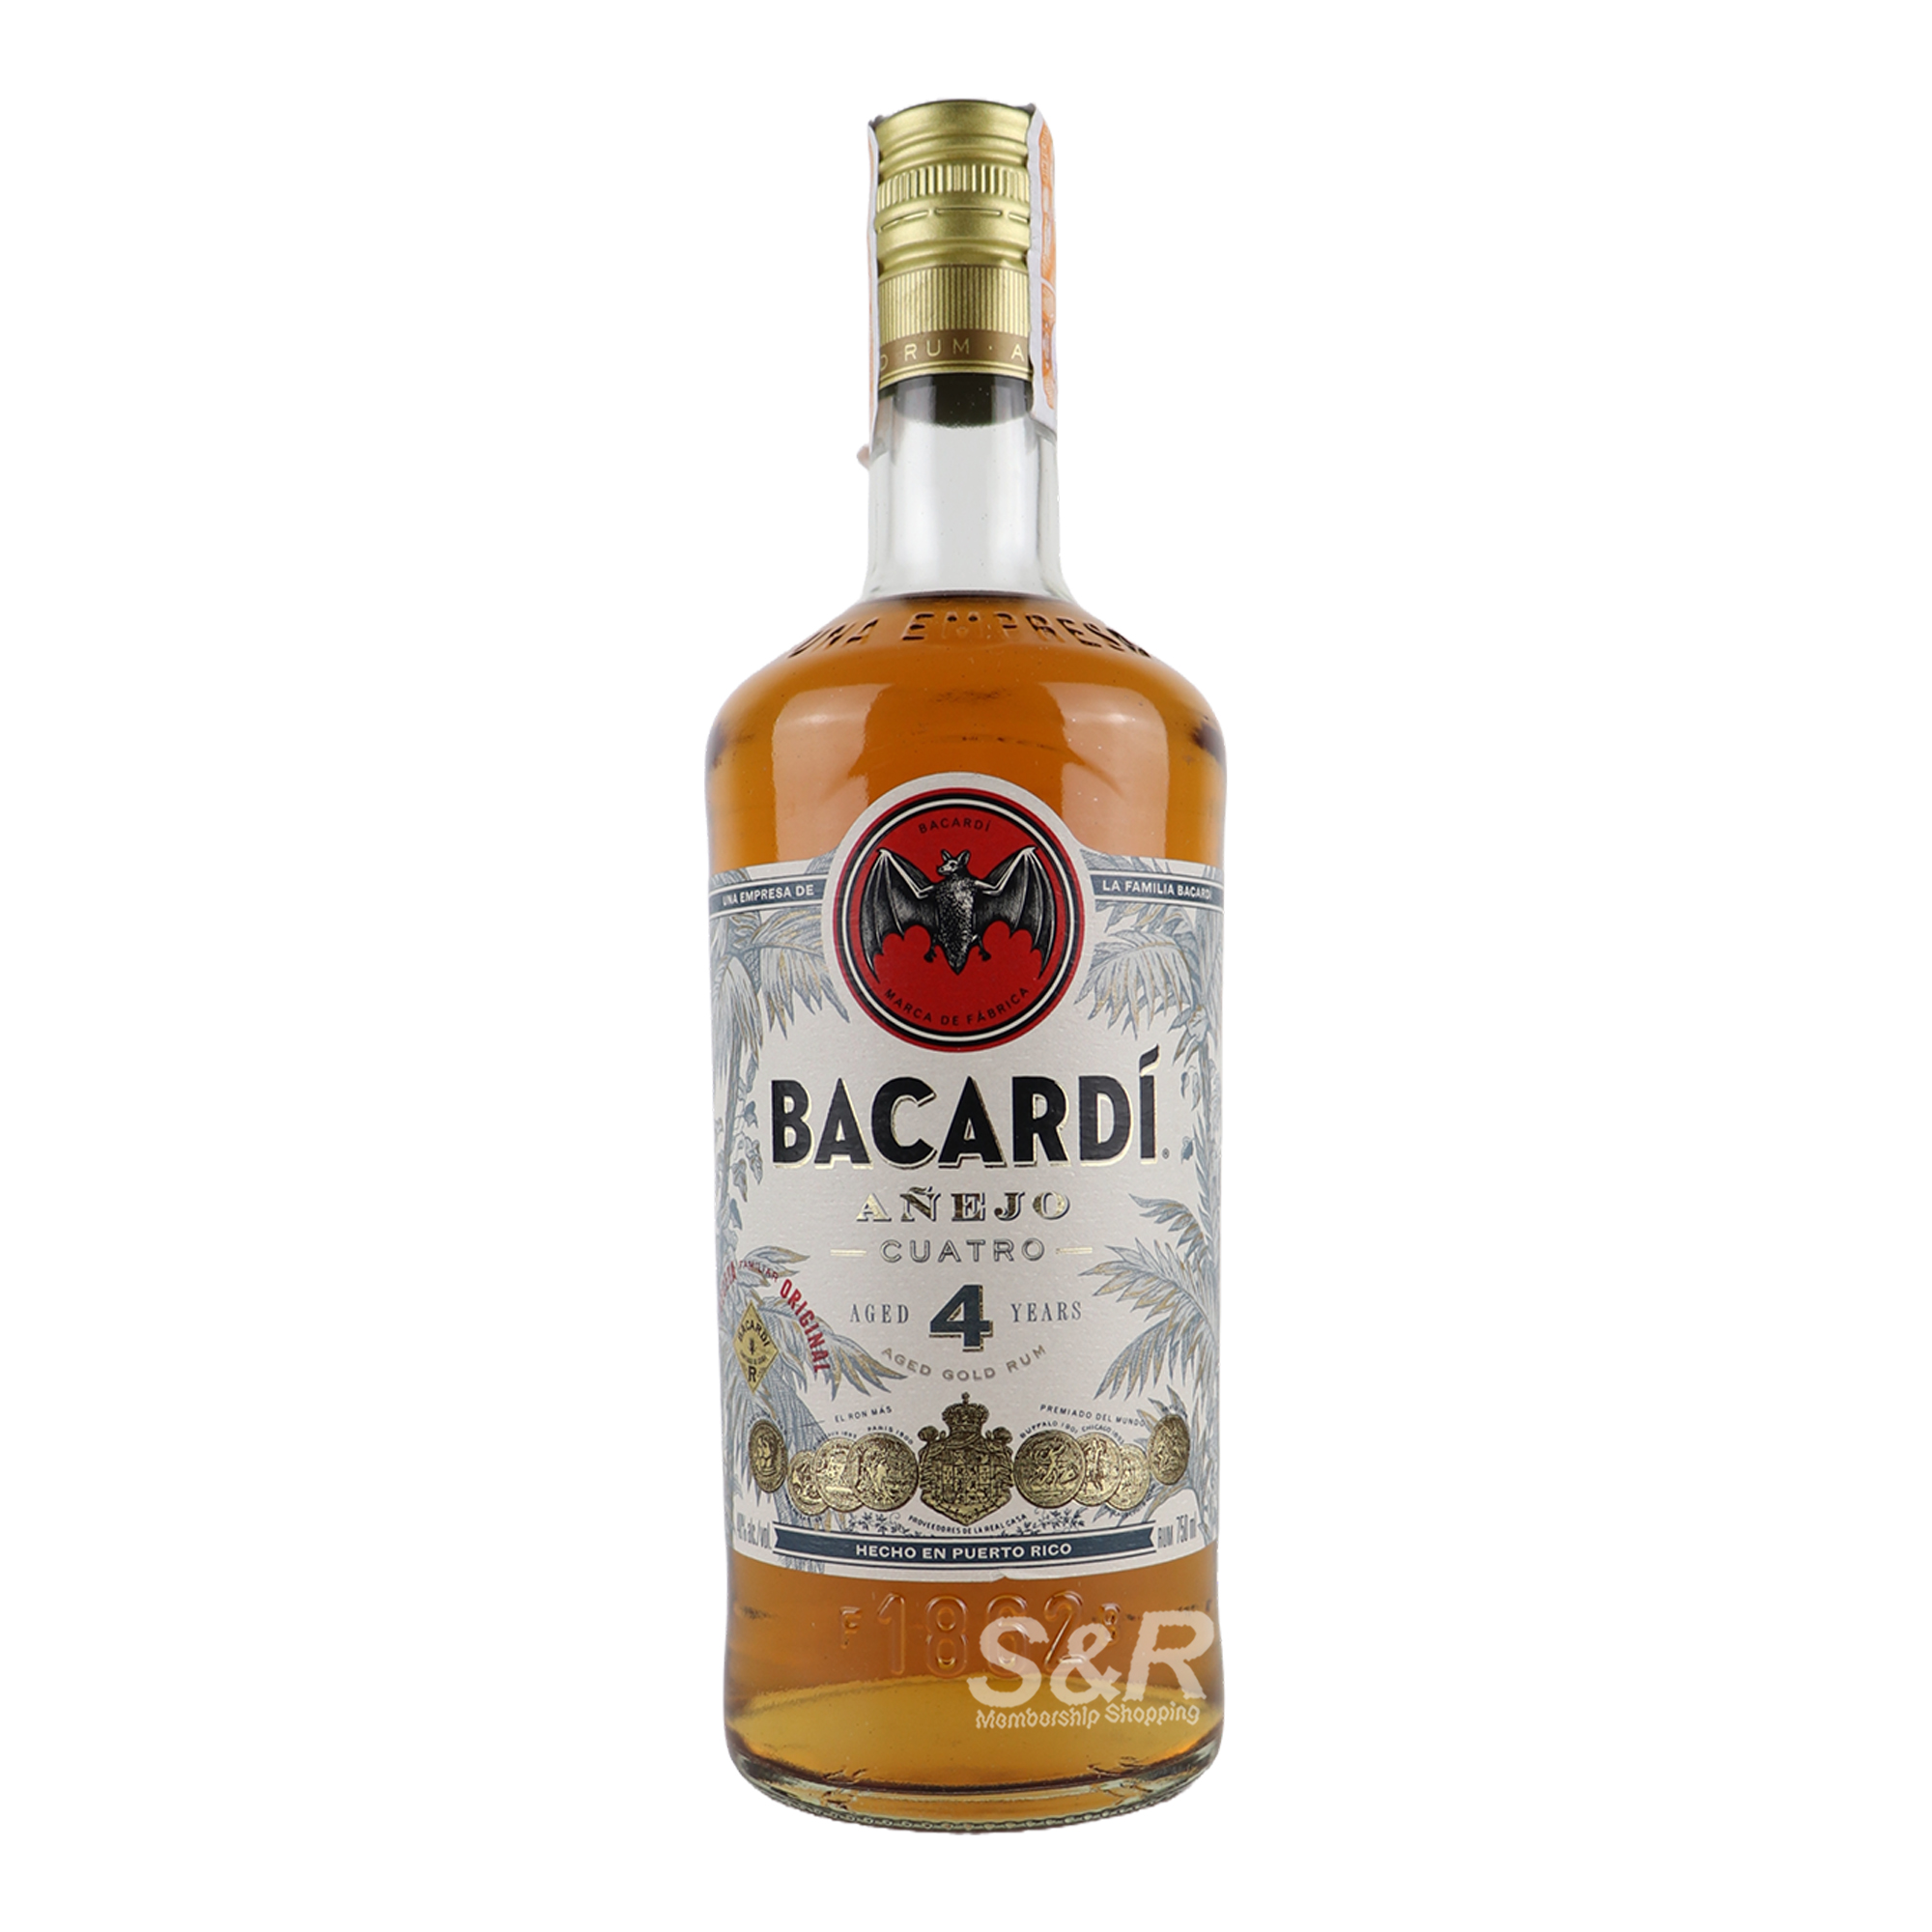 Bacardi Añejo Cuatro Aged Gold Rum 750mL